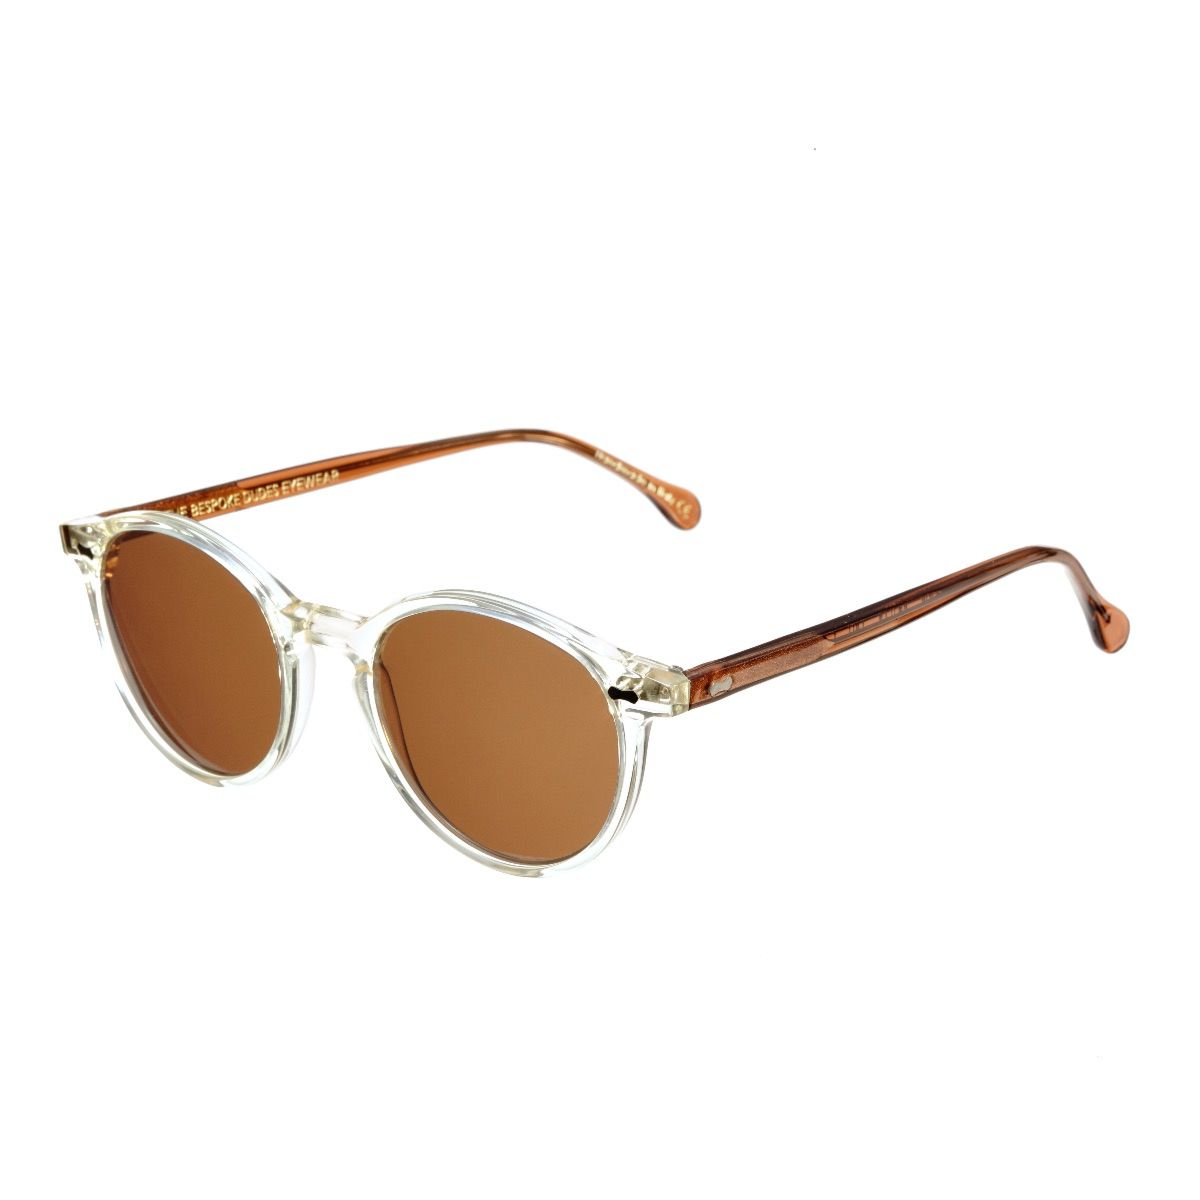 The Bespoke Dudes - Sunglasses, Cran Bicolor (Tobacco), Zonnebrillen | NEW TAILOR Webshop